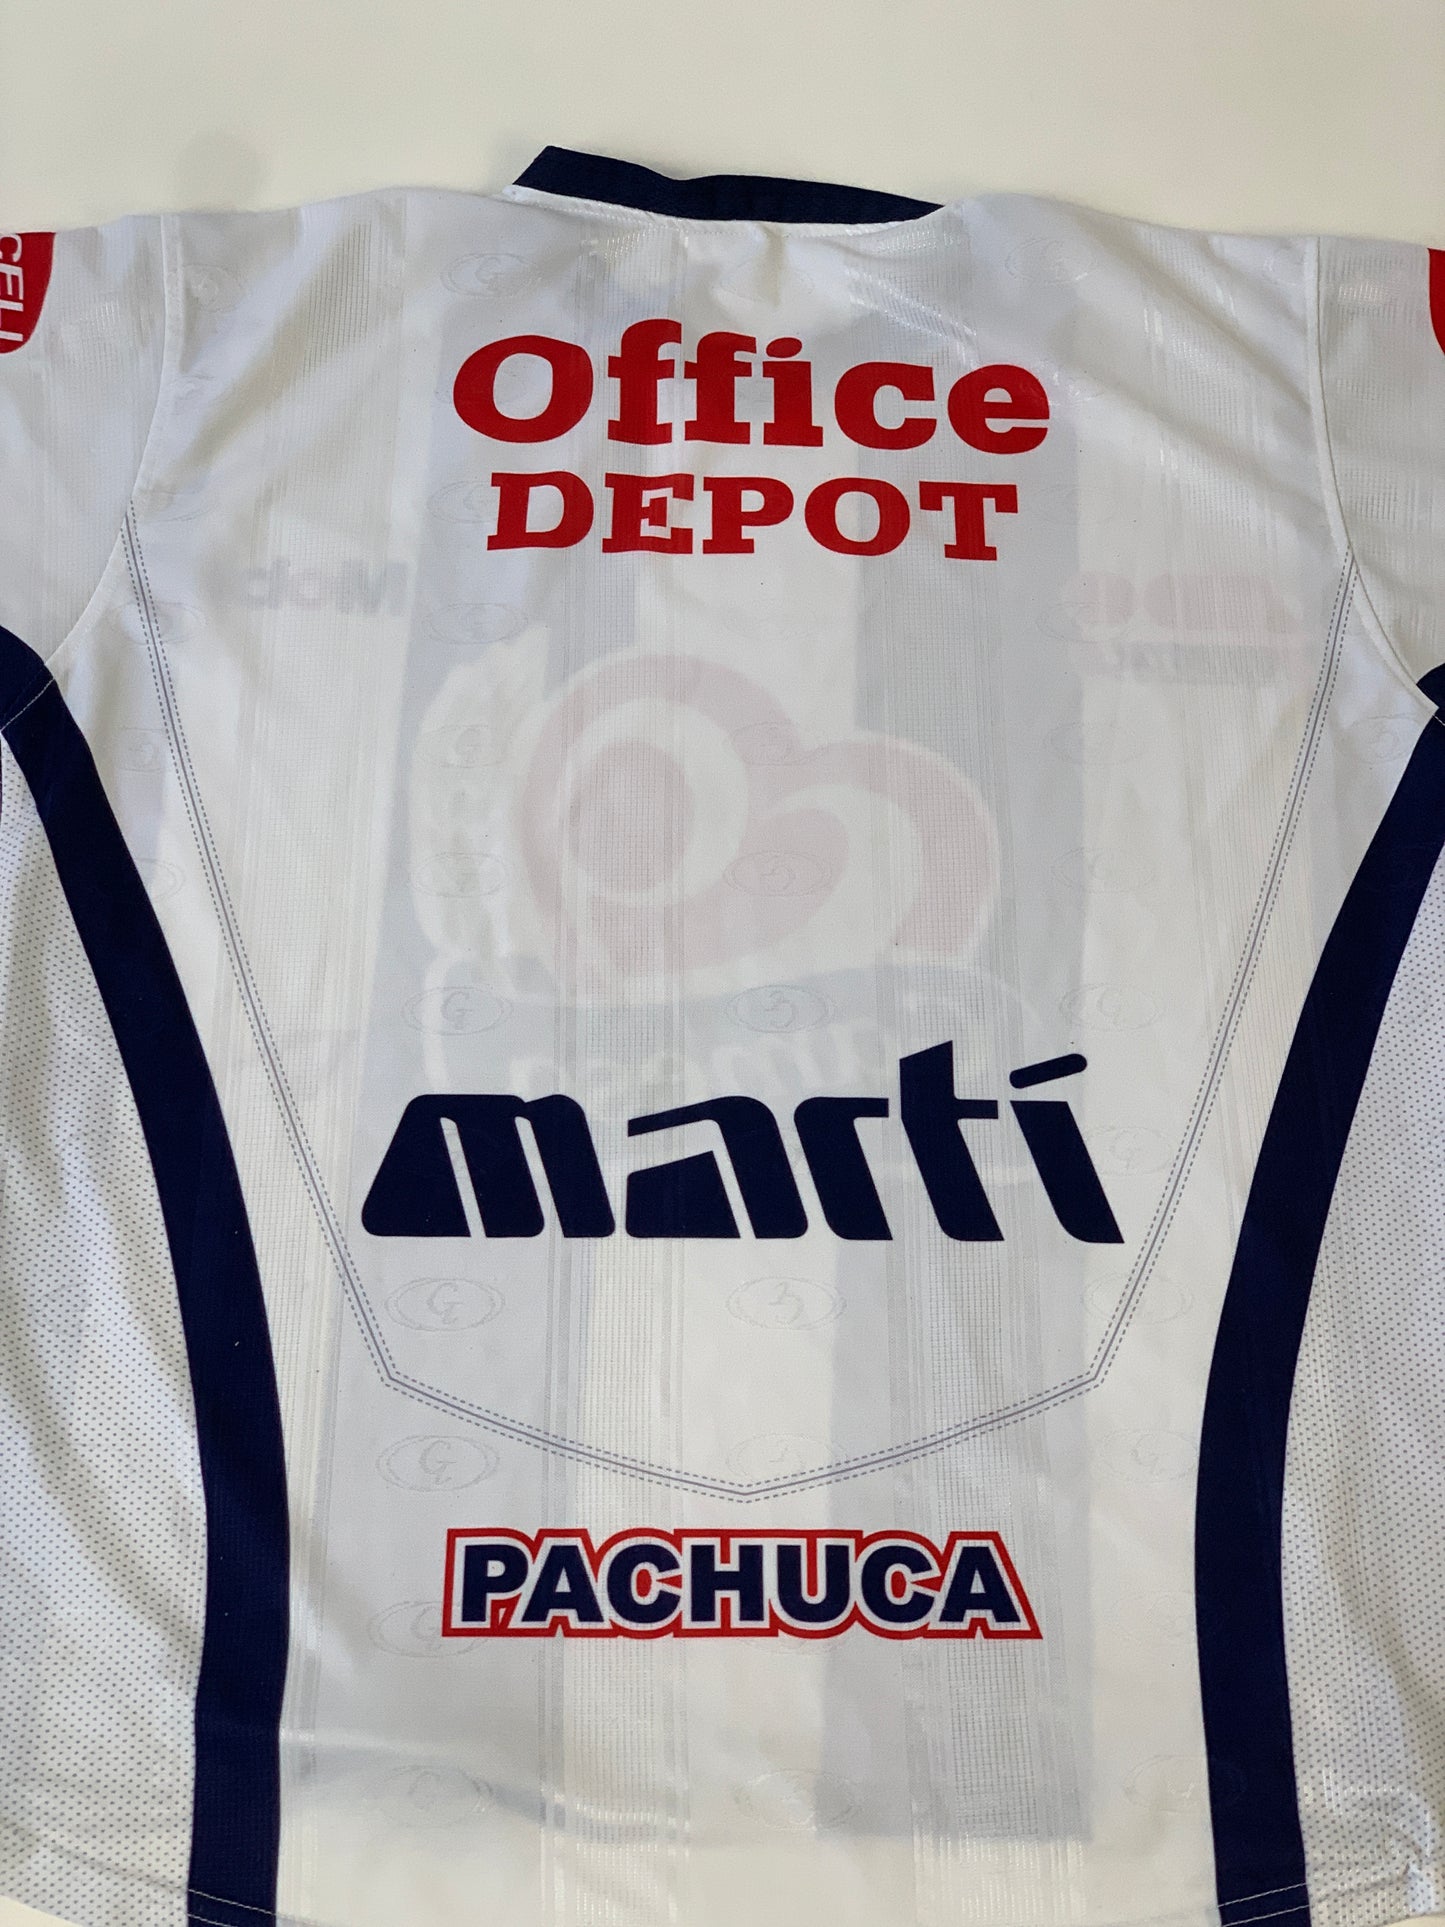 Pachuca 2009 Vintage Jersey - S